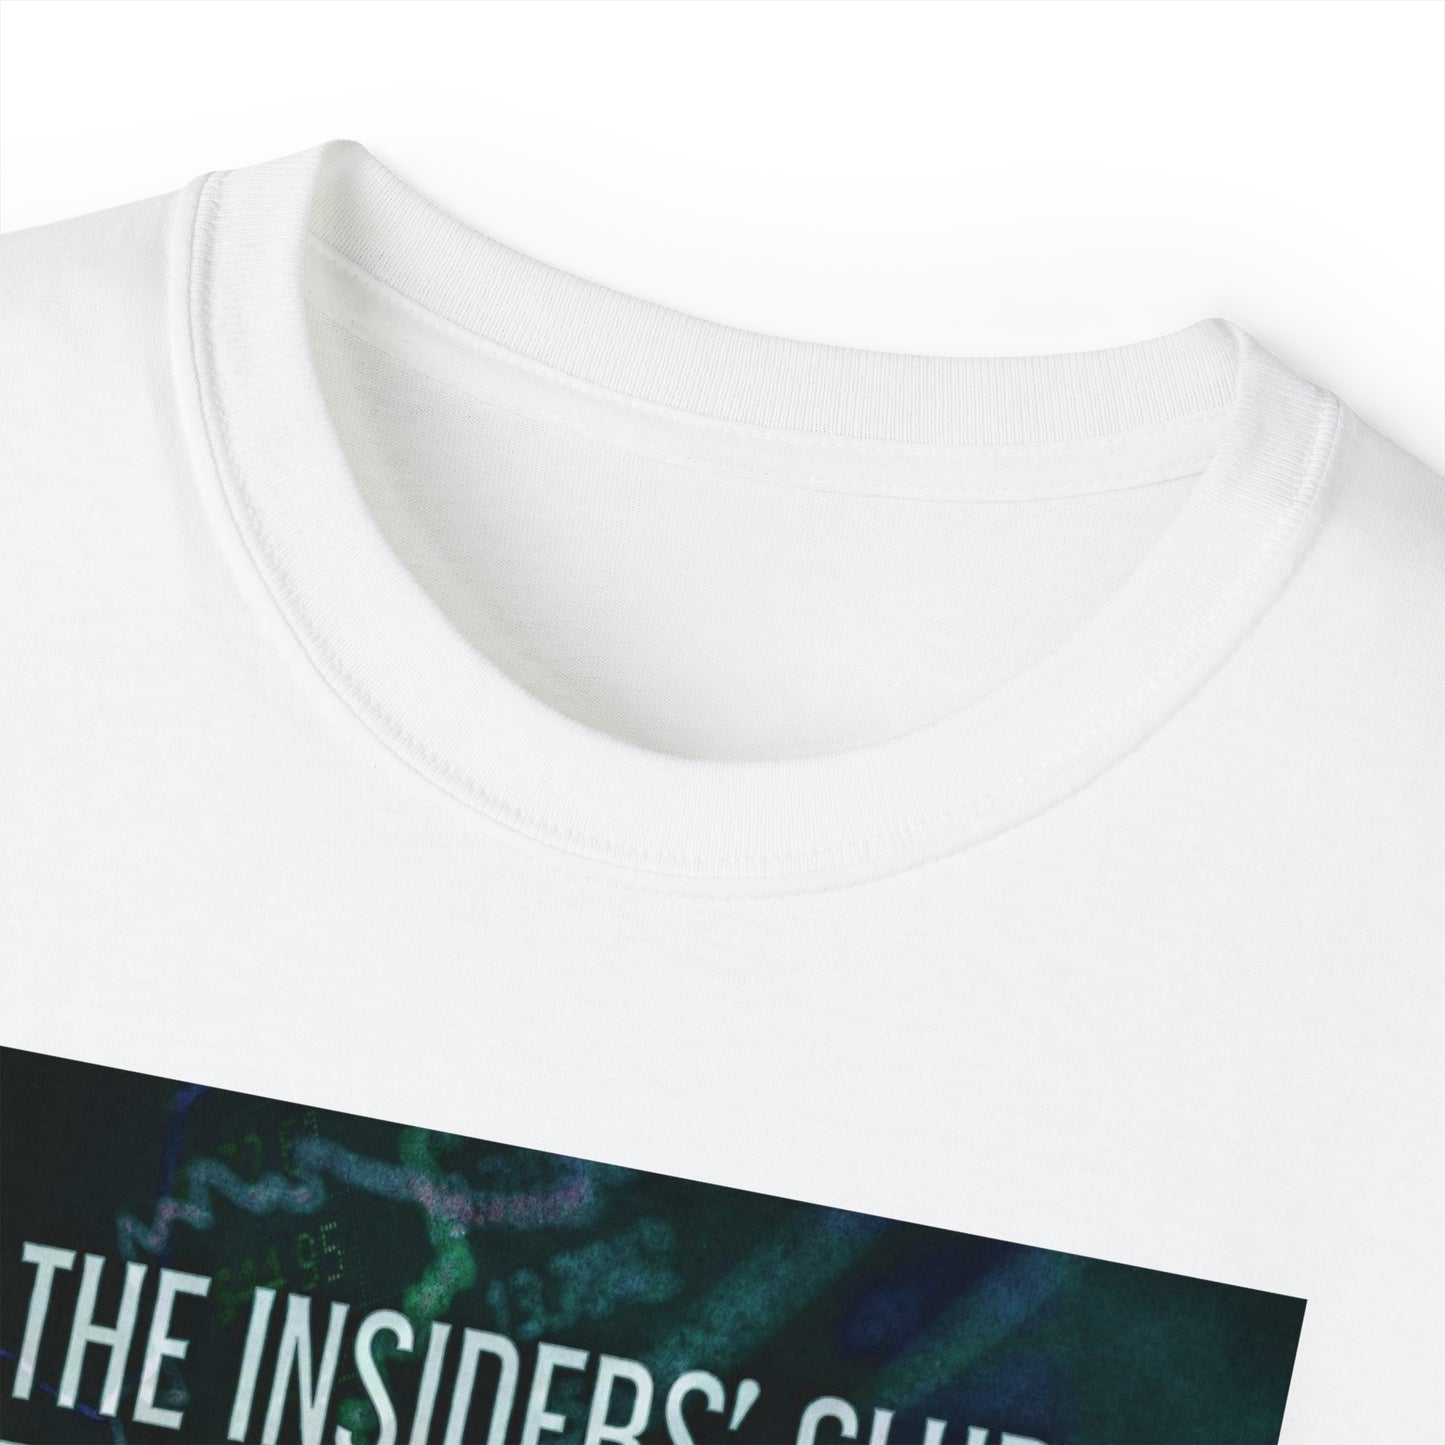 The Insiders' Club - Unisex T-Shirt